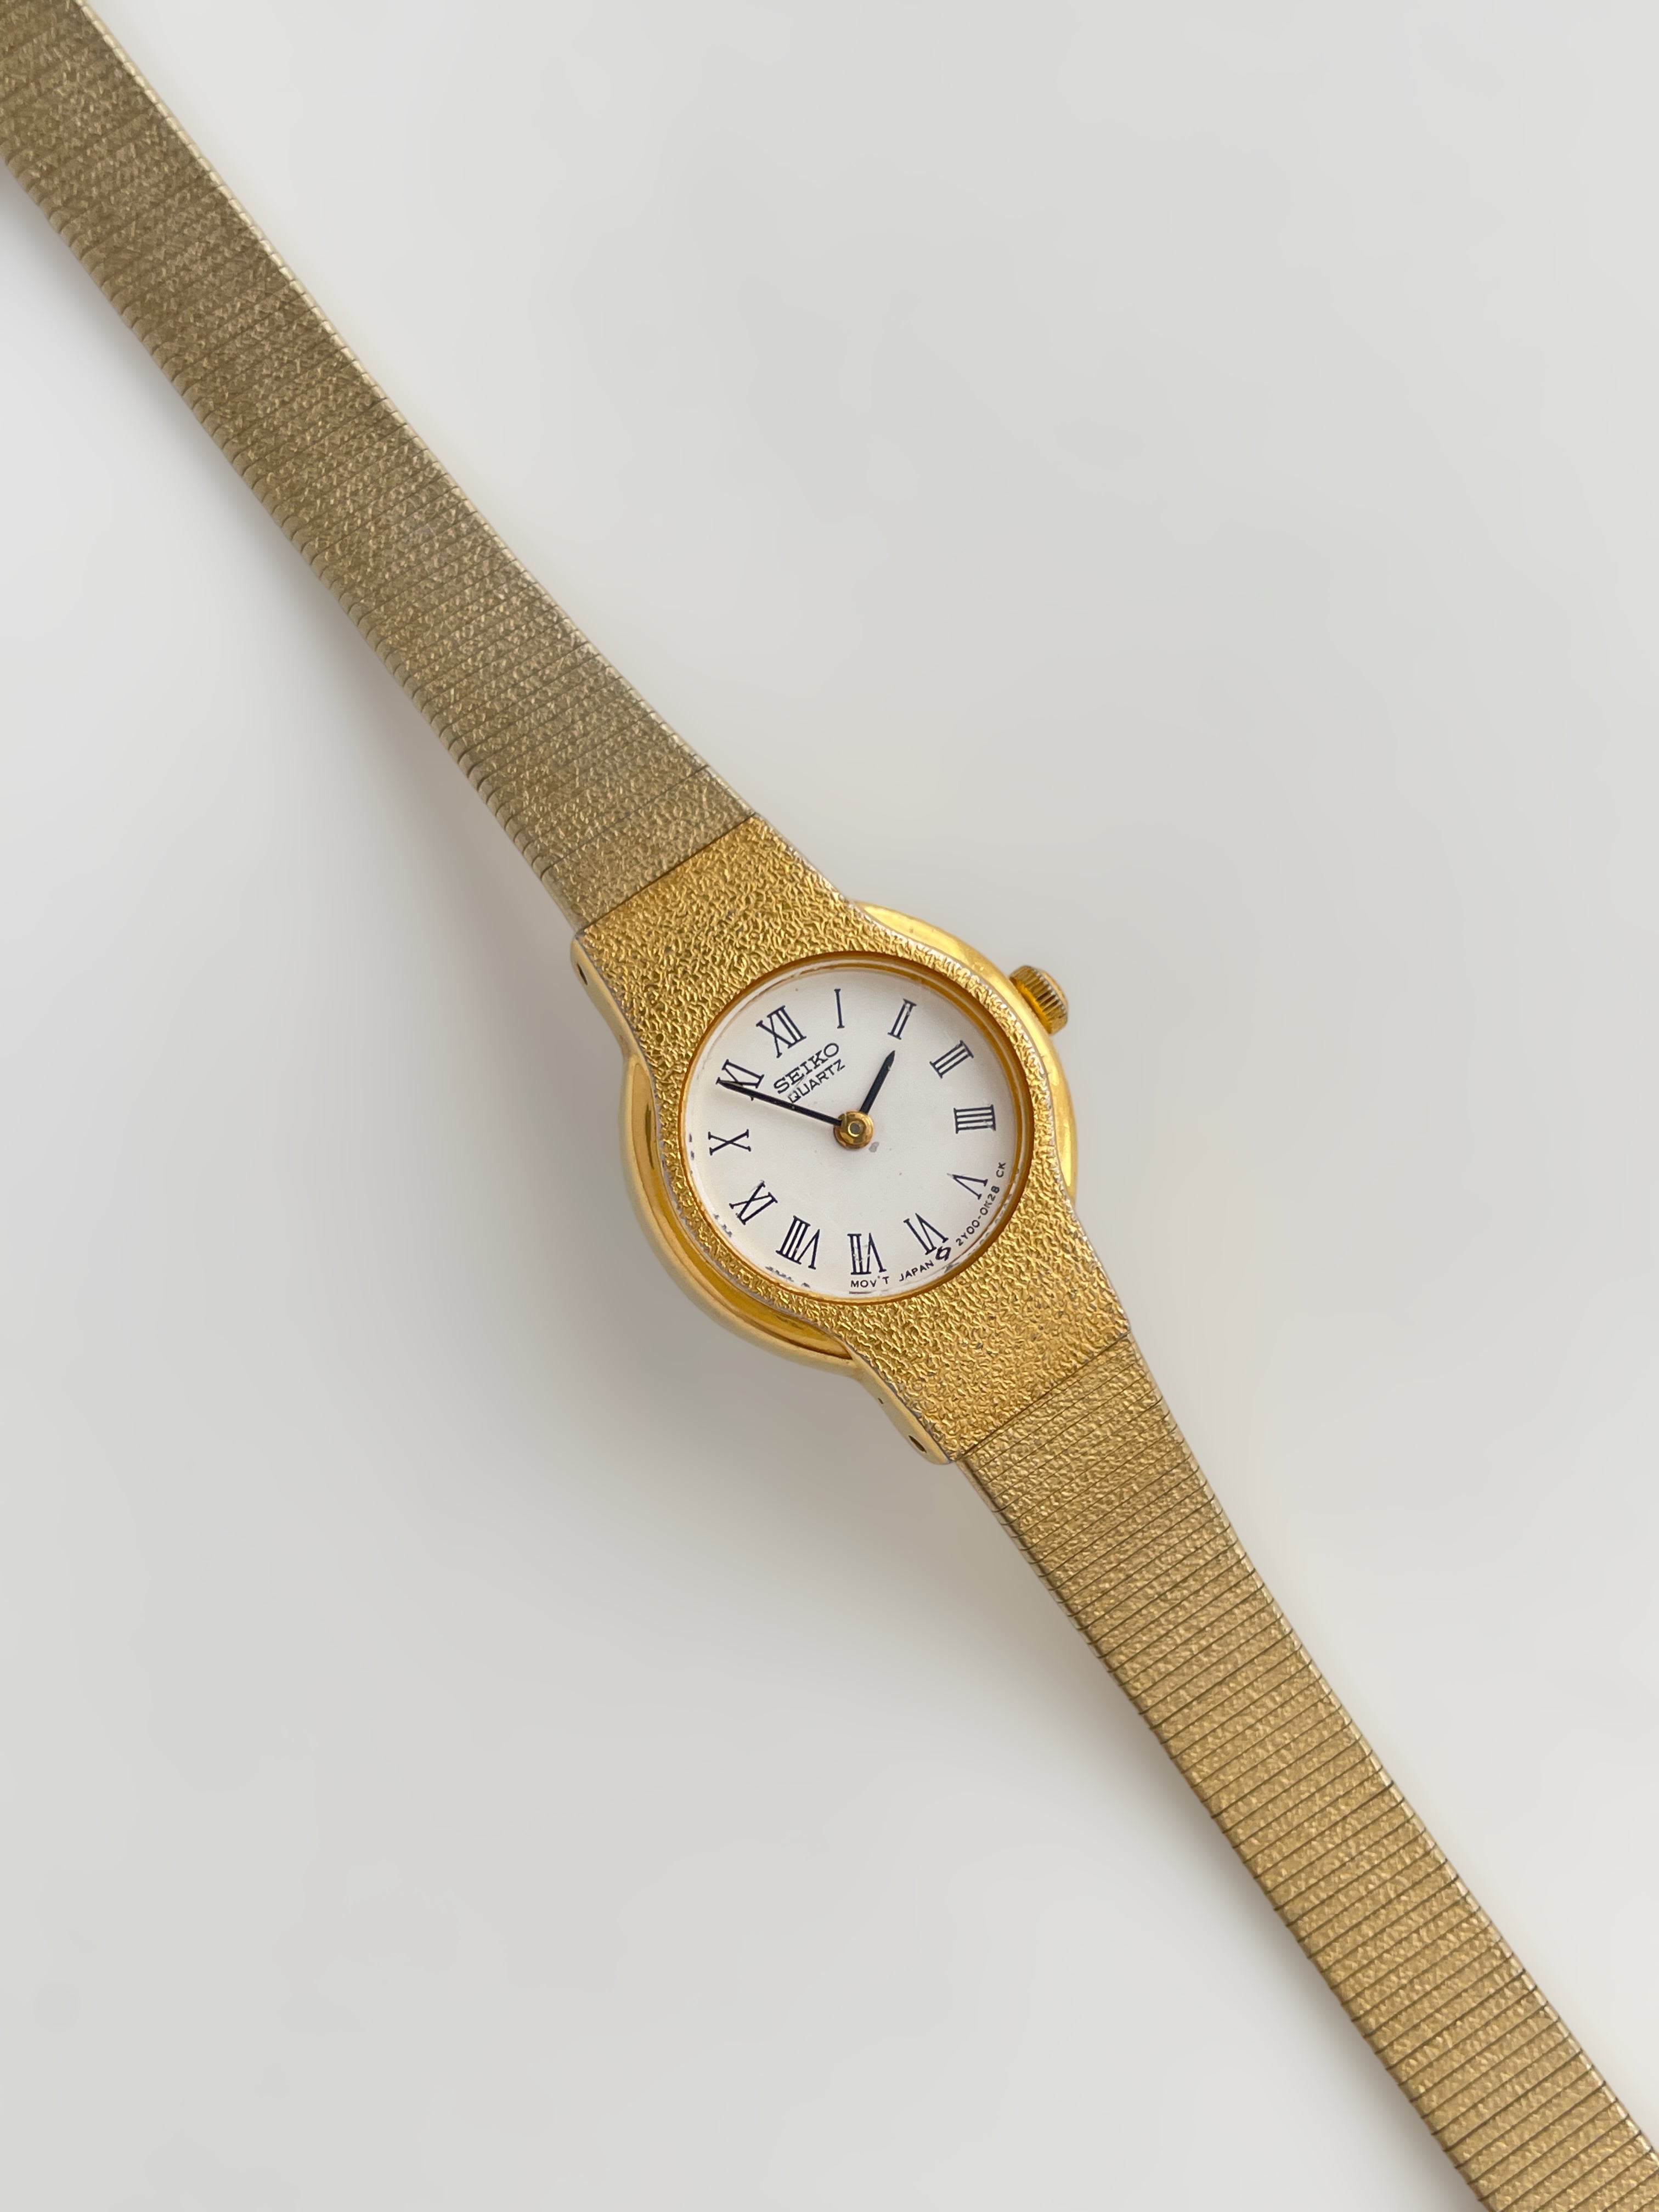 Vintage Seiko Watch – BY GOM